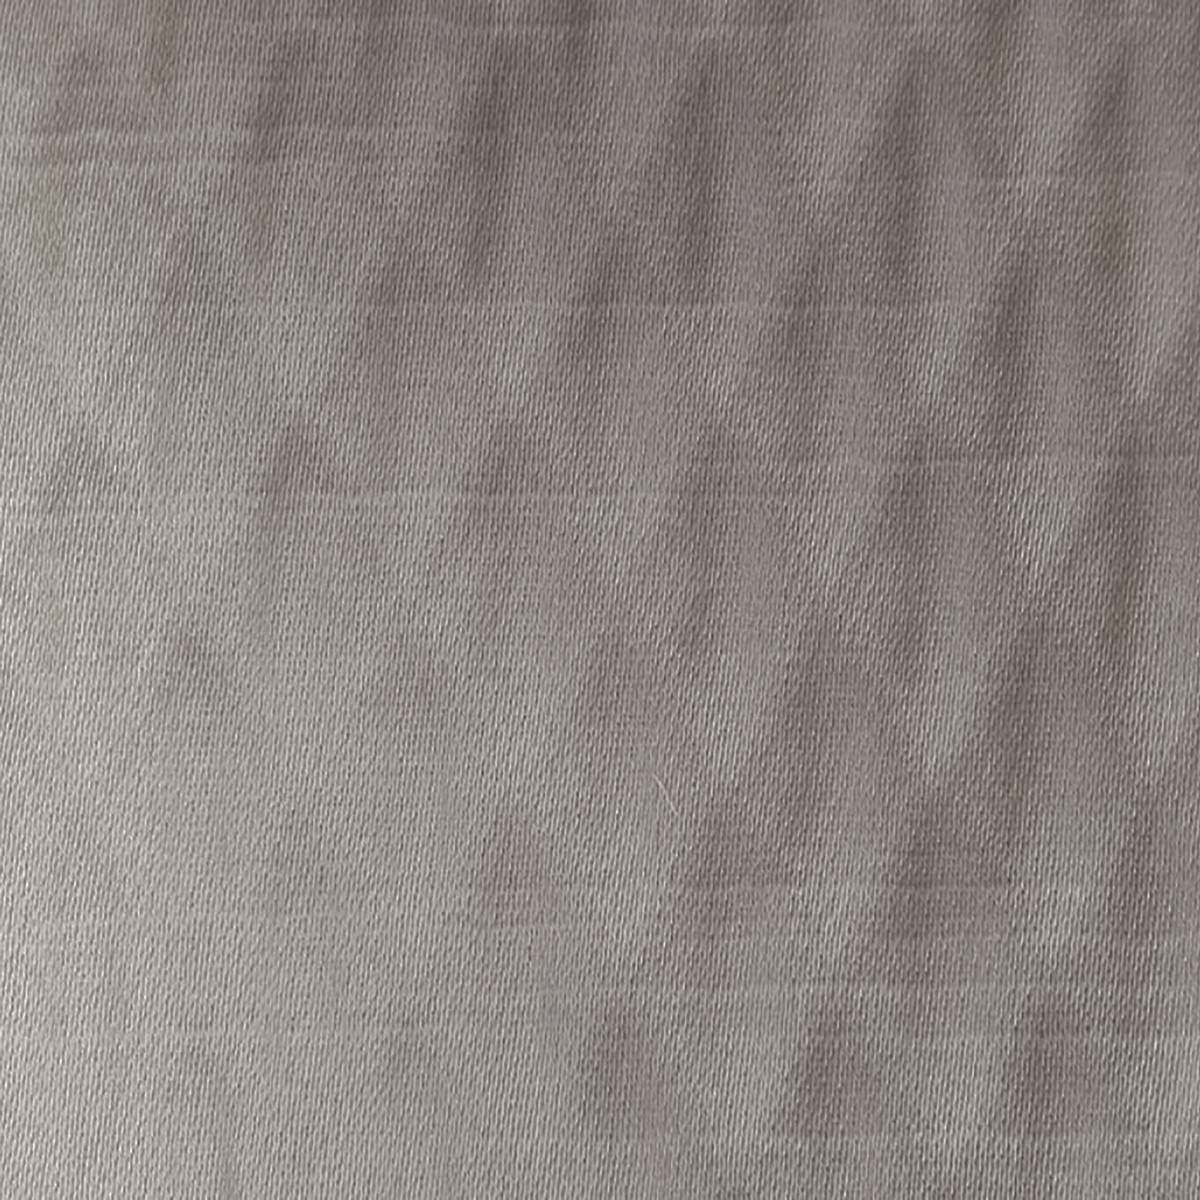 Alie Graphite Fabric by Ashley Wilde